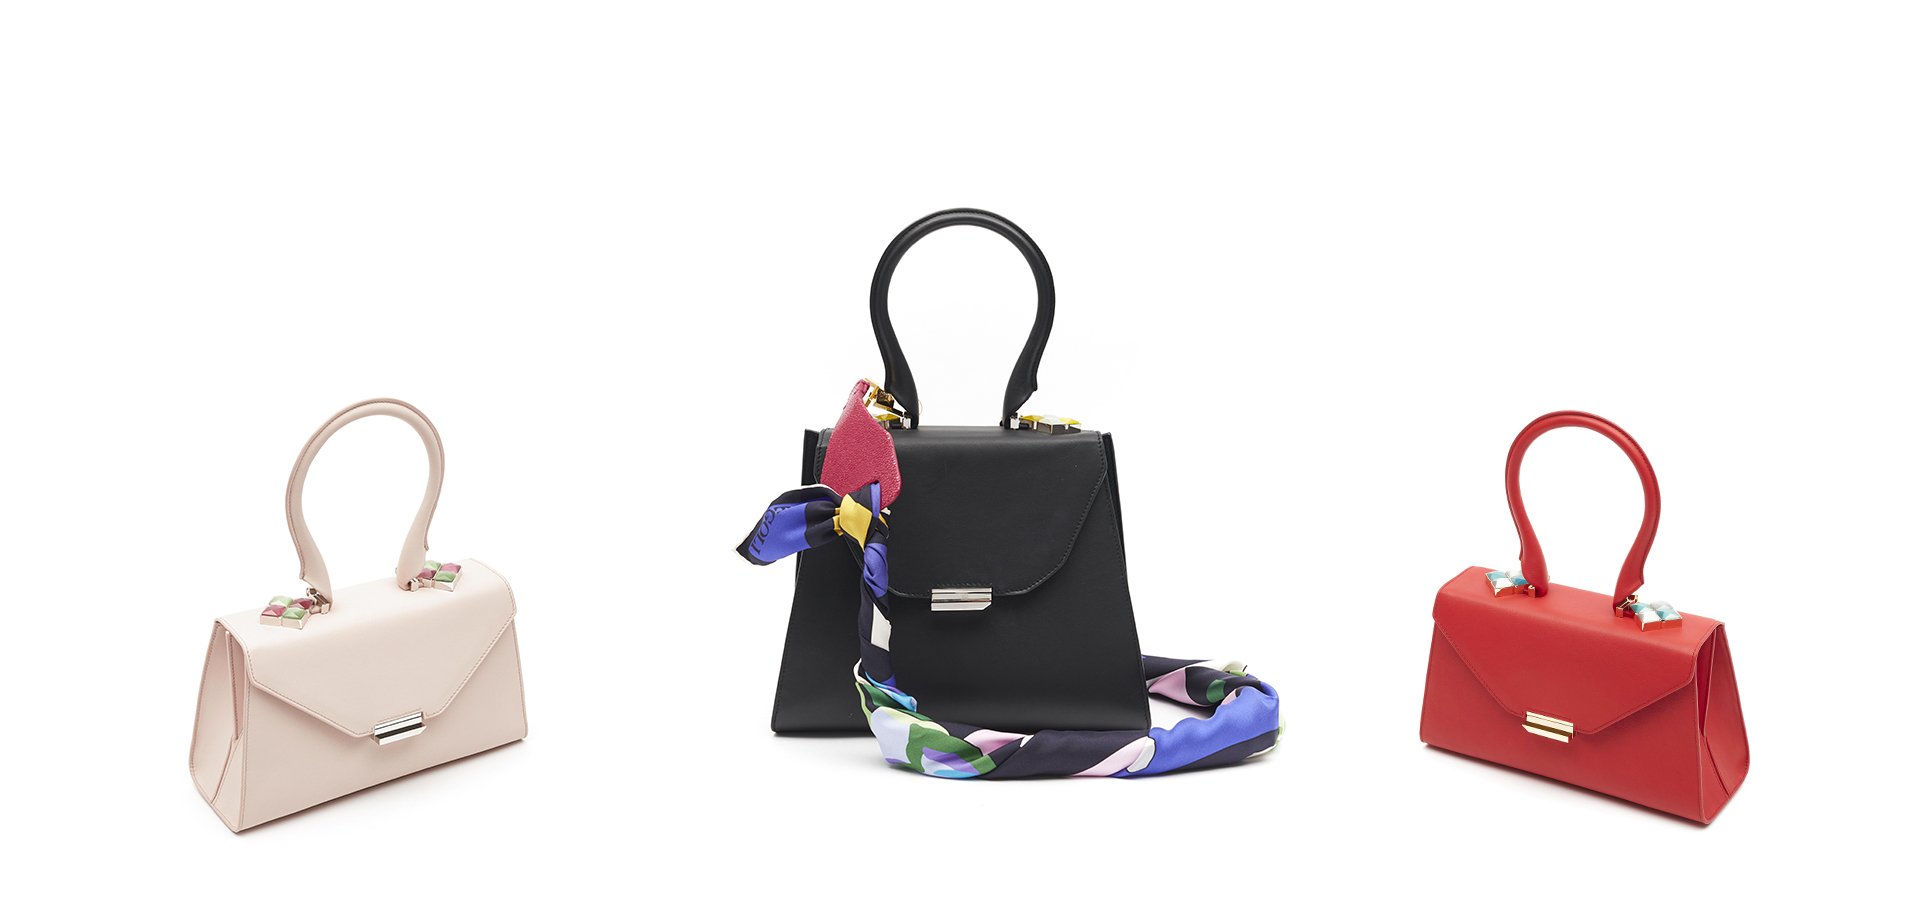 Fregoli | Fregoli Haute Couture handbags